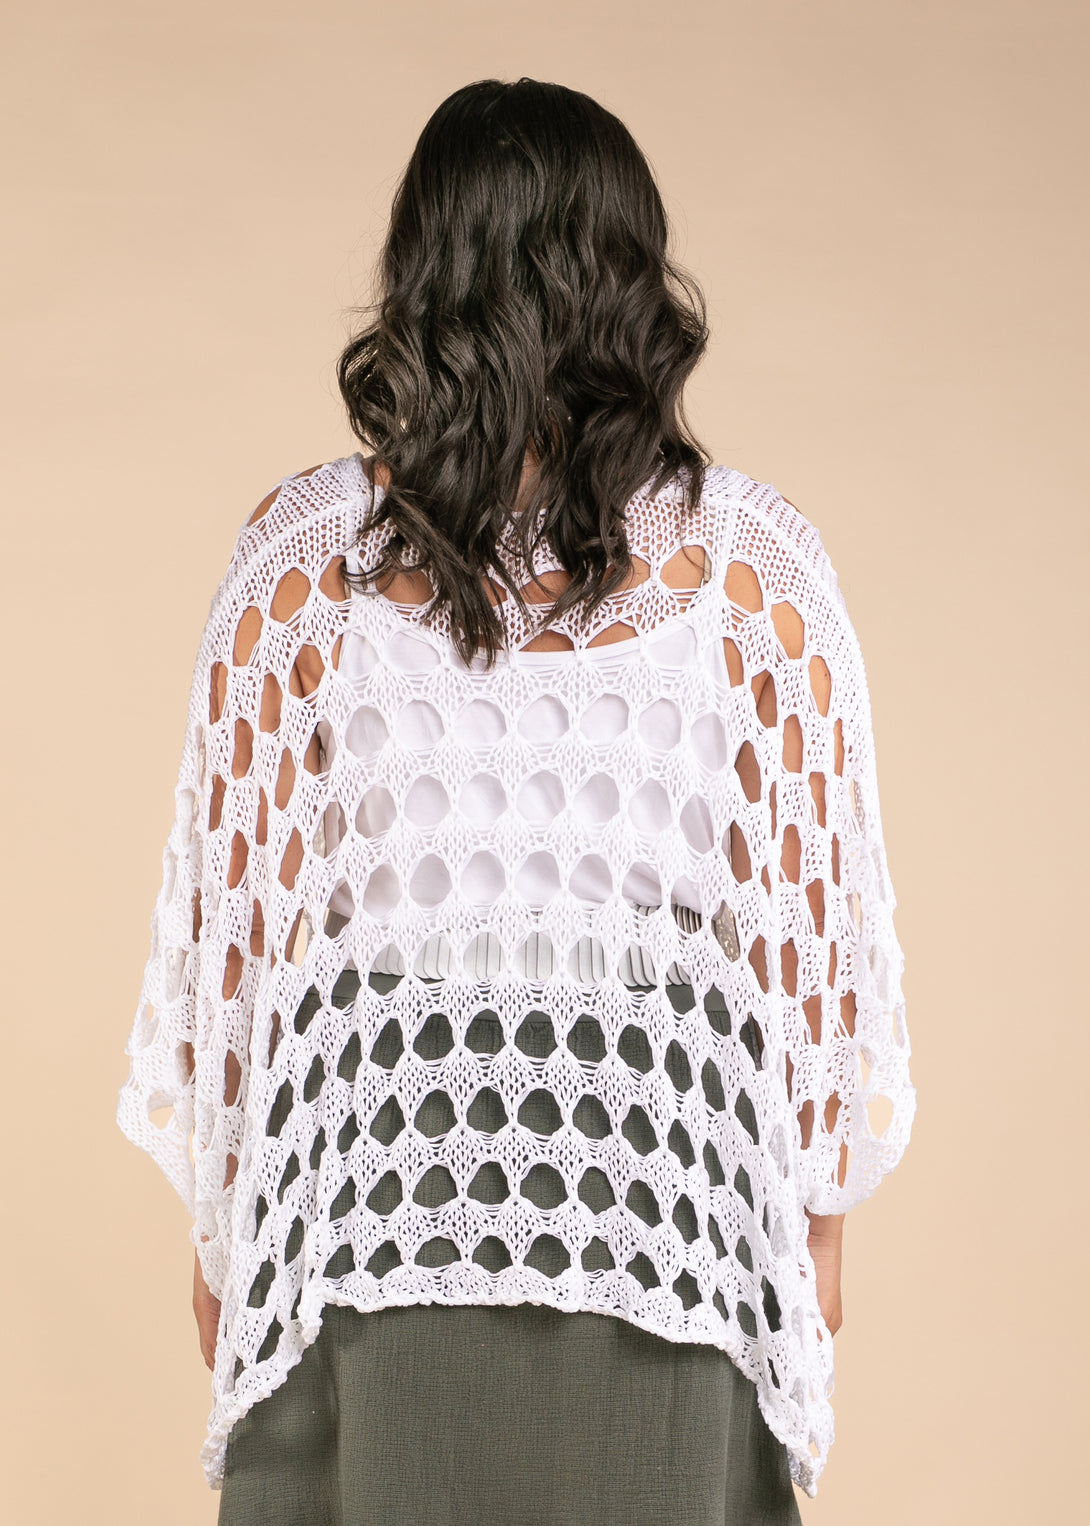 Asha Knit Top in White - Imagine Fashion